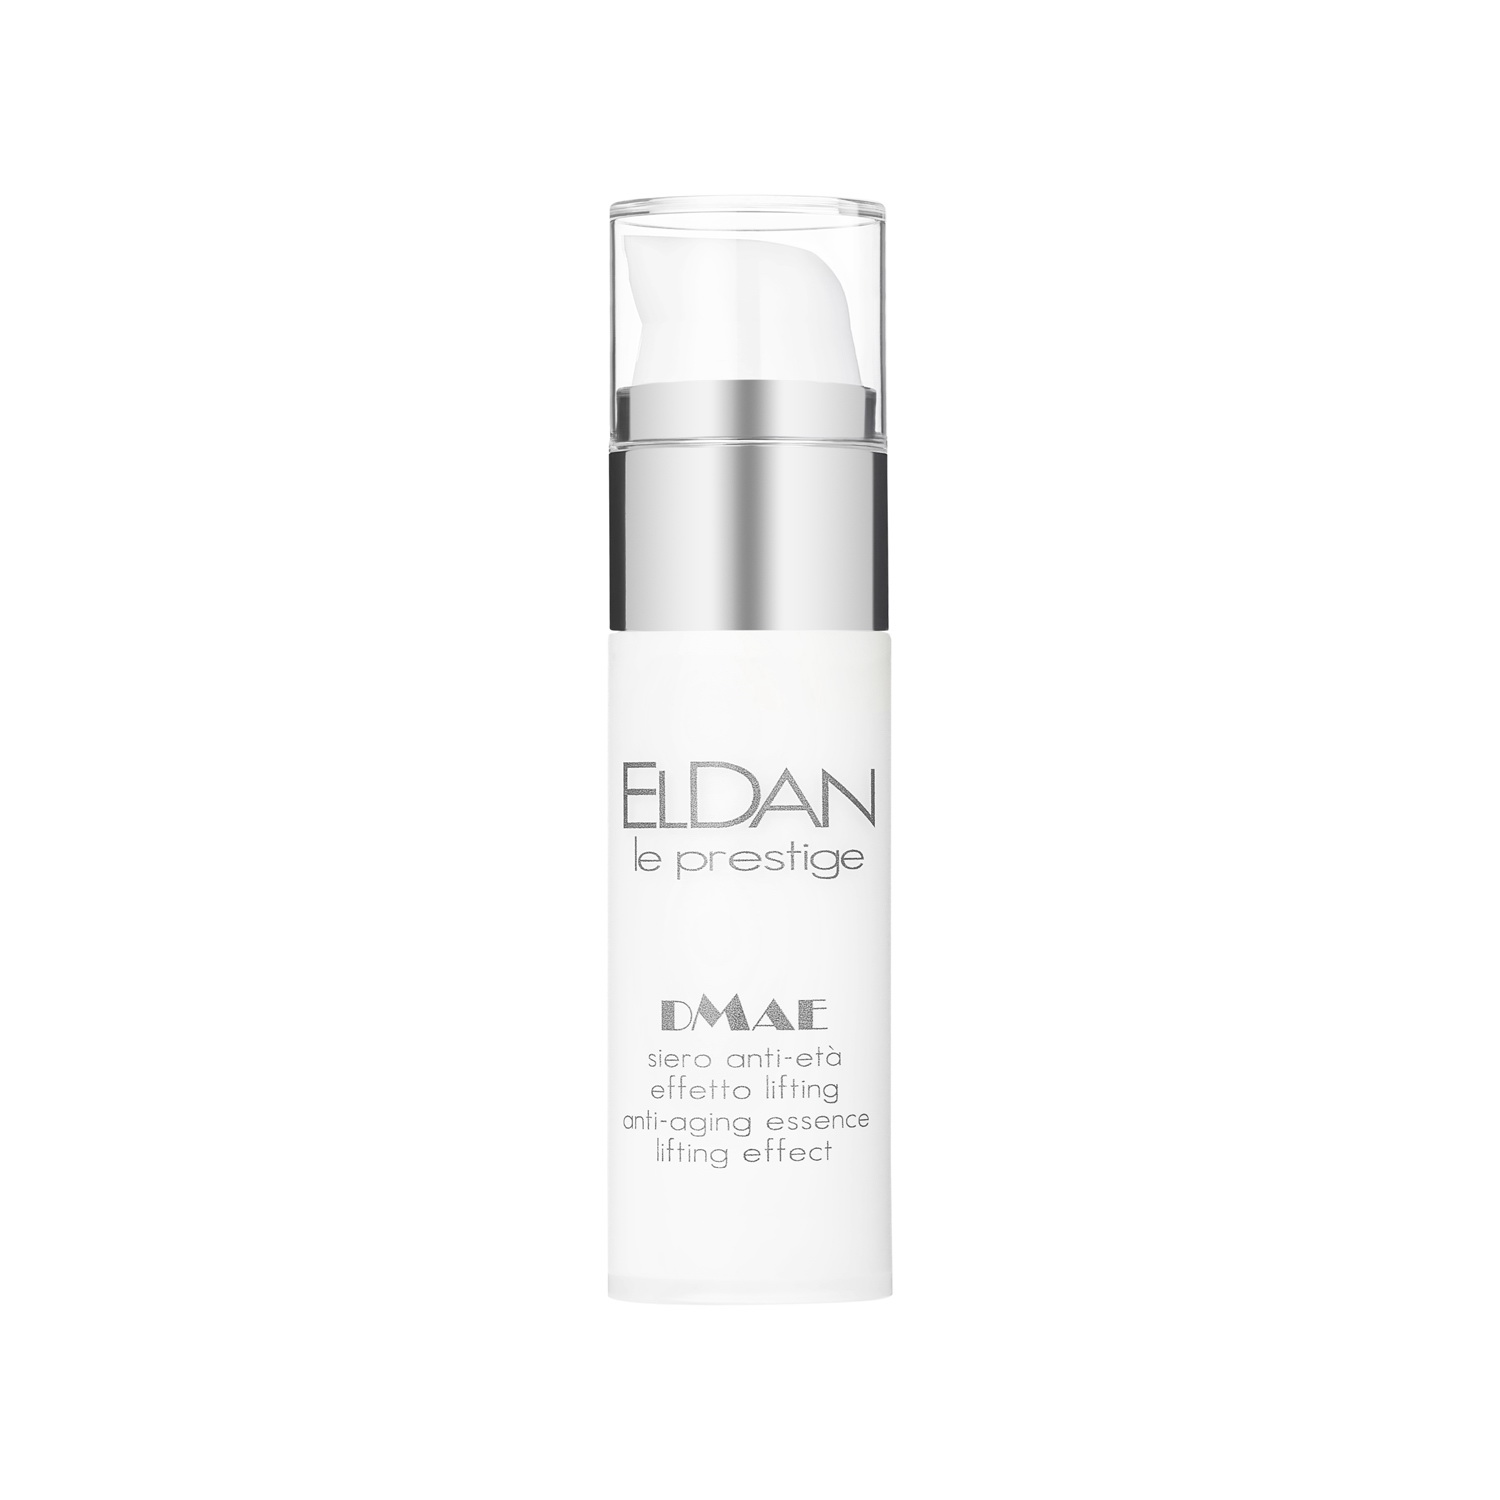 Сыворотка для лица Eldan Cosmetics DMAE Anti-Aging Essence Lifting Effect, 30 мл сыворотка для лица l or dnc фруктовые кислоты 15 мл